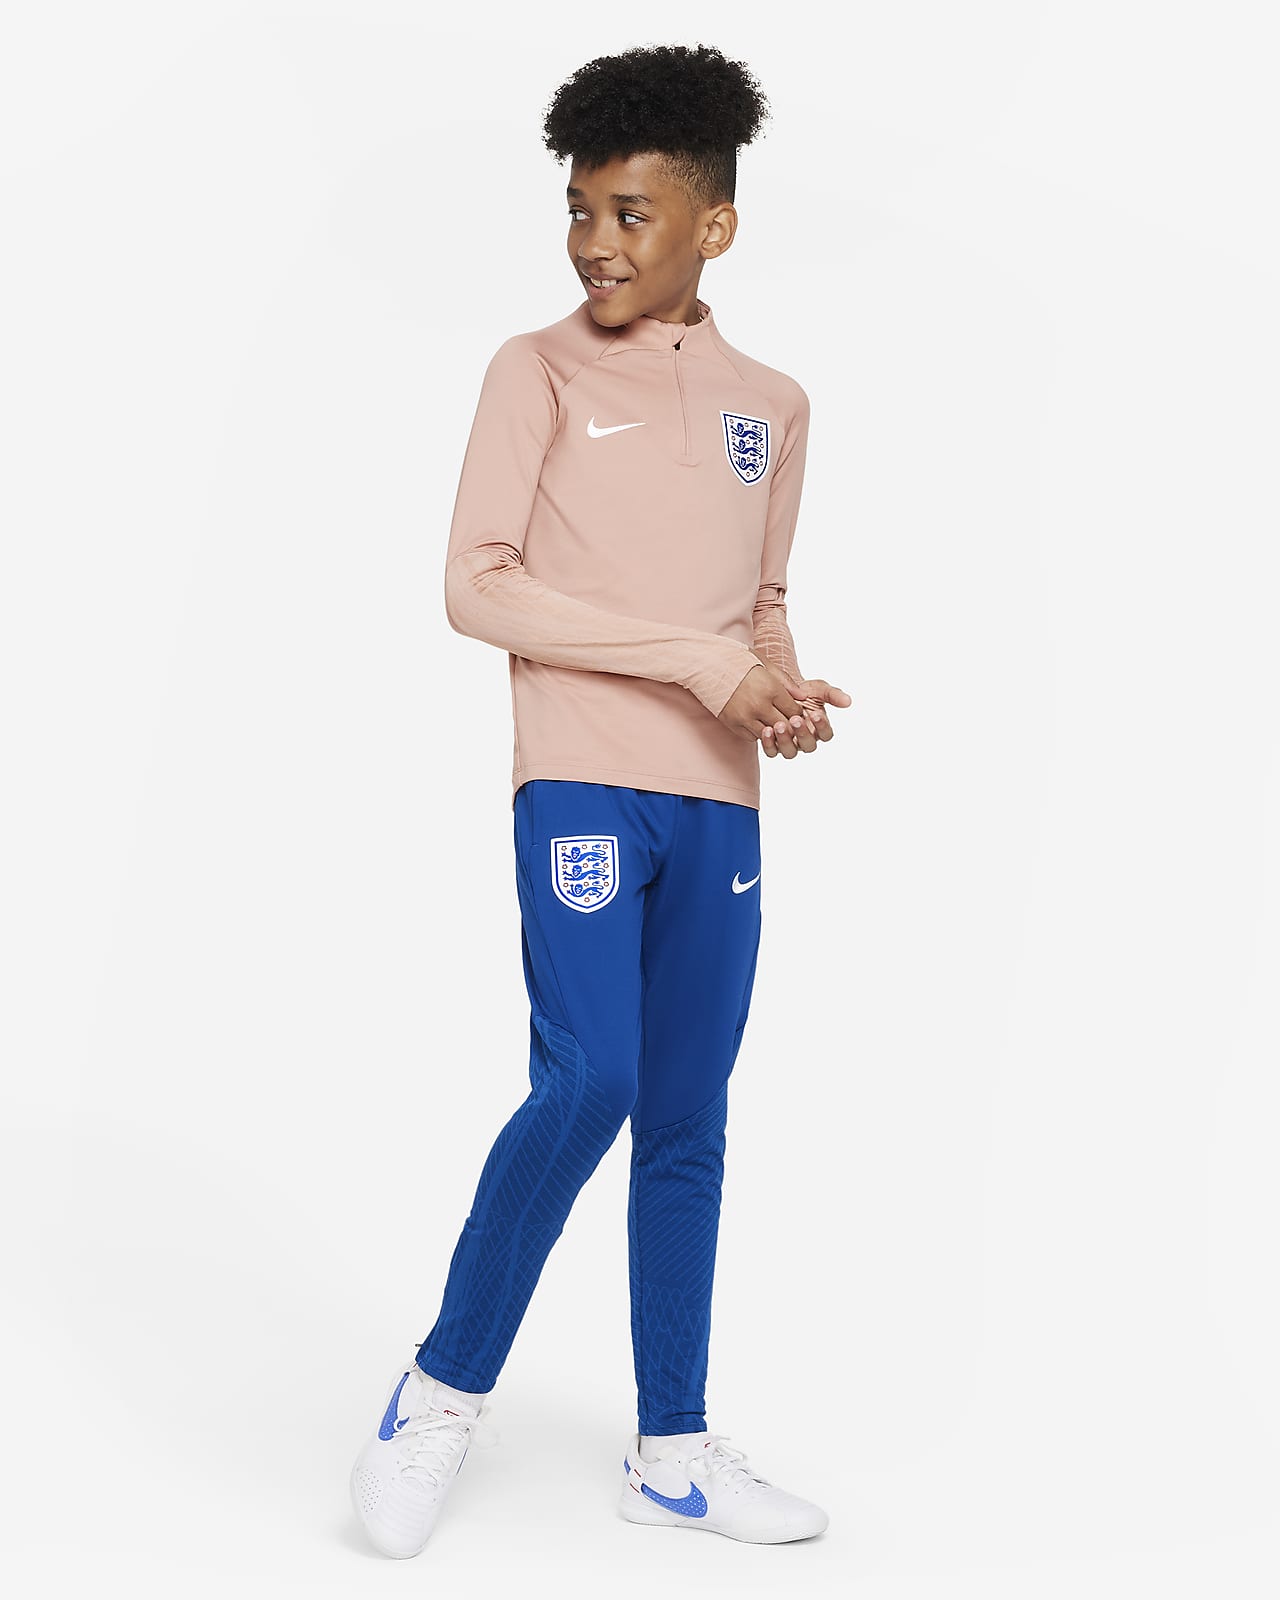 Boys Nike pants size 12 month | Nike pants, Boys nike, Pants